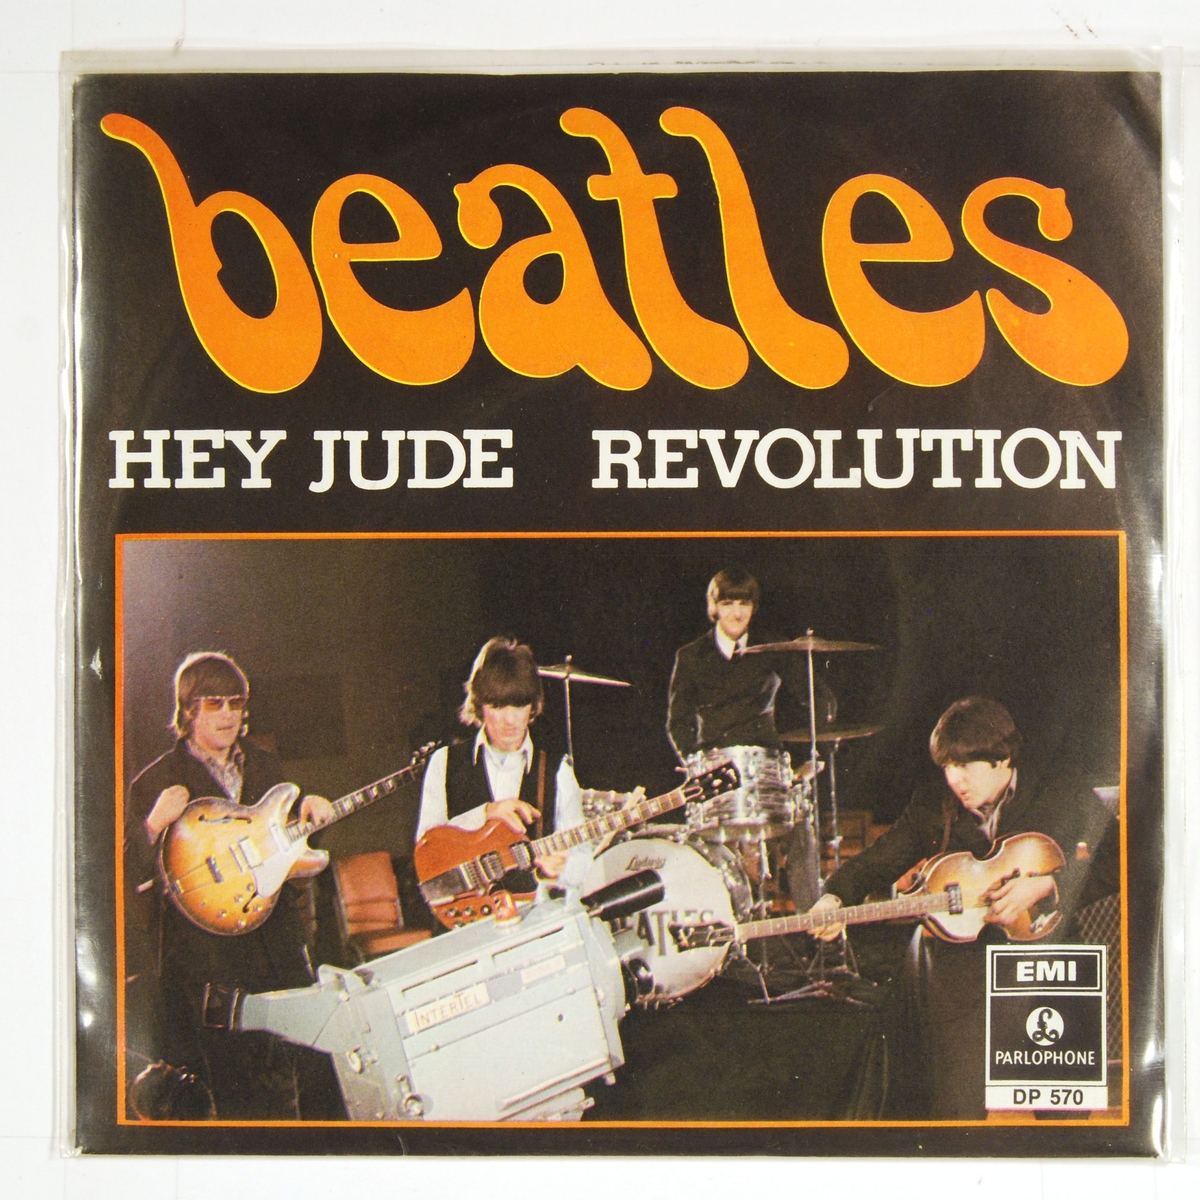 Fotografi av "The Beatles" med musikkinstrumenter.